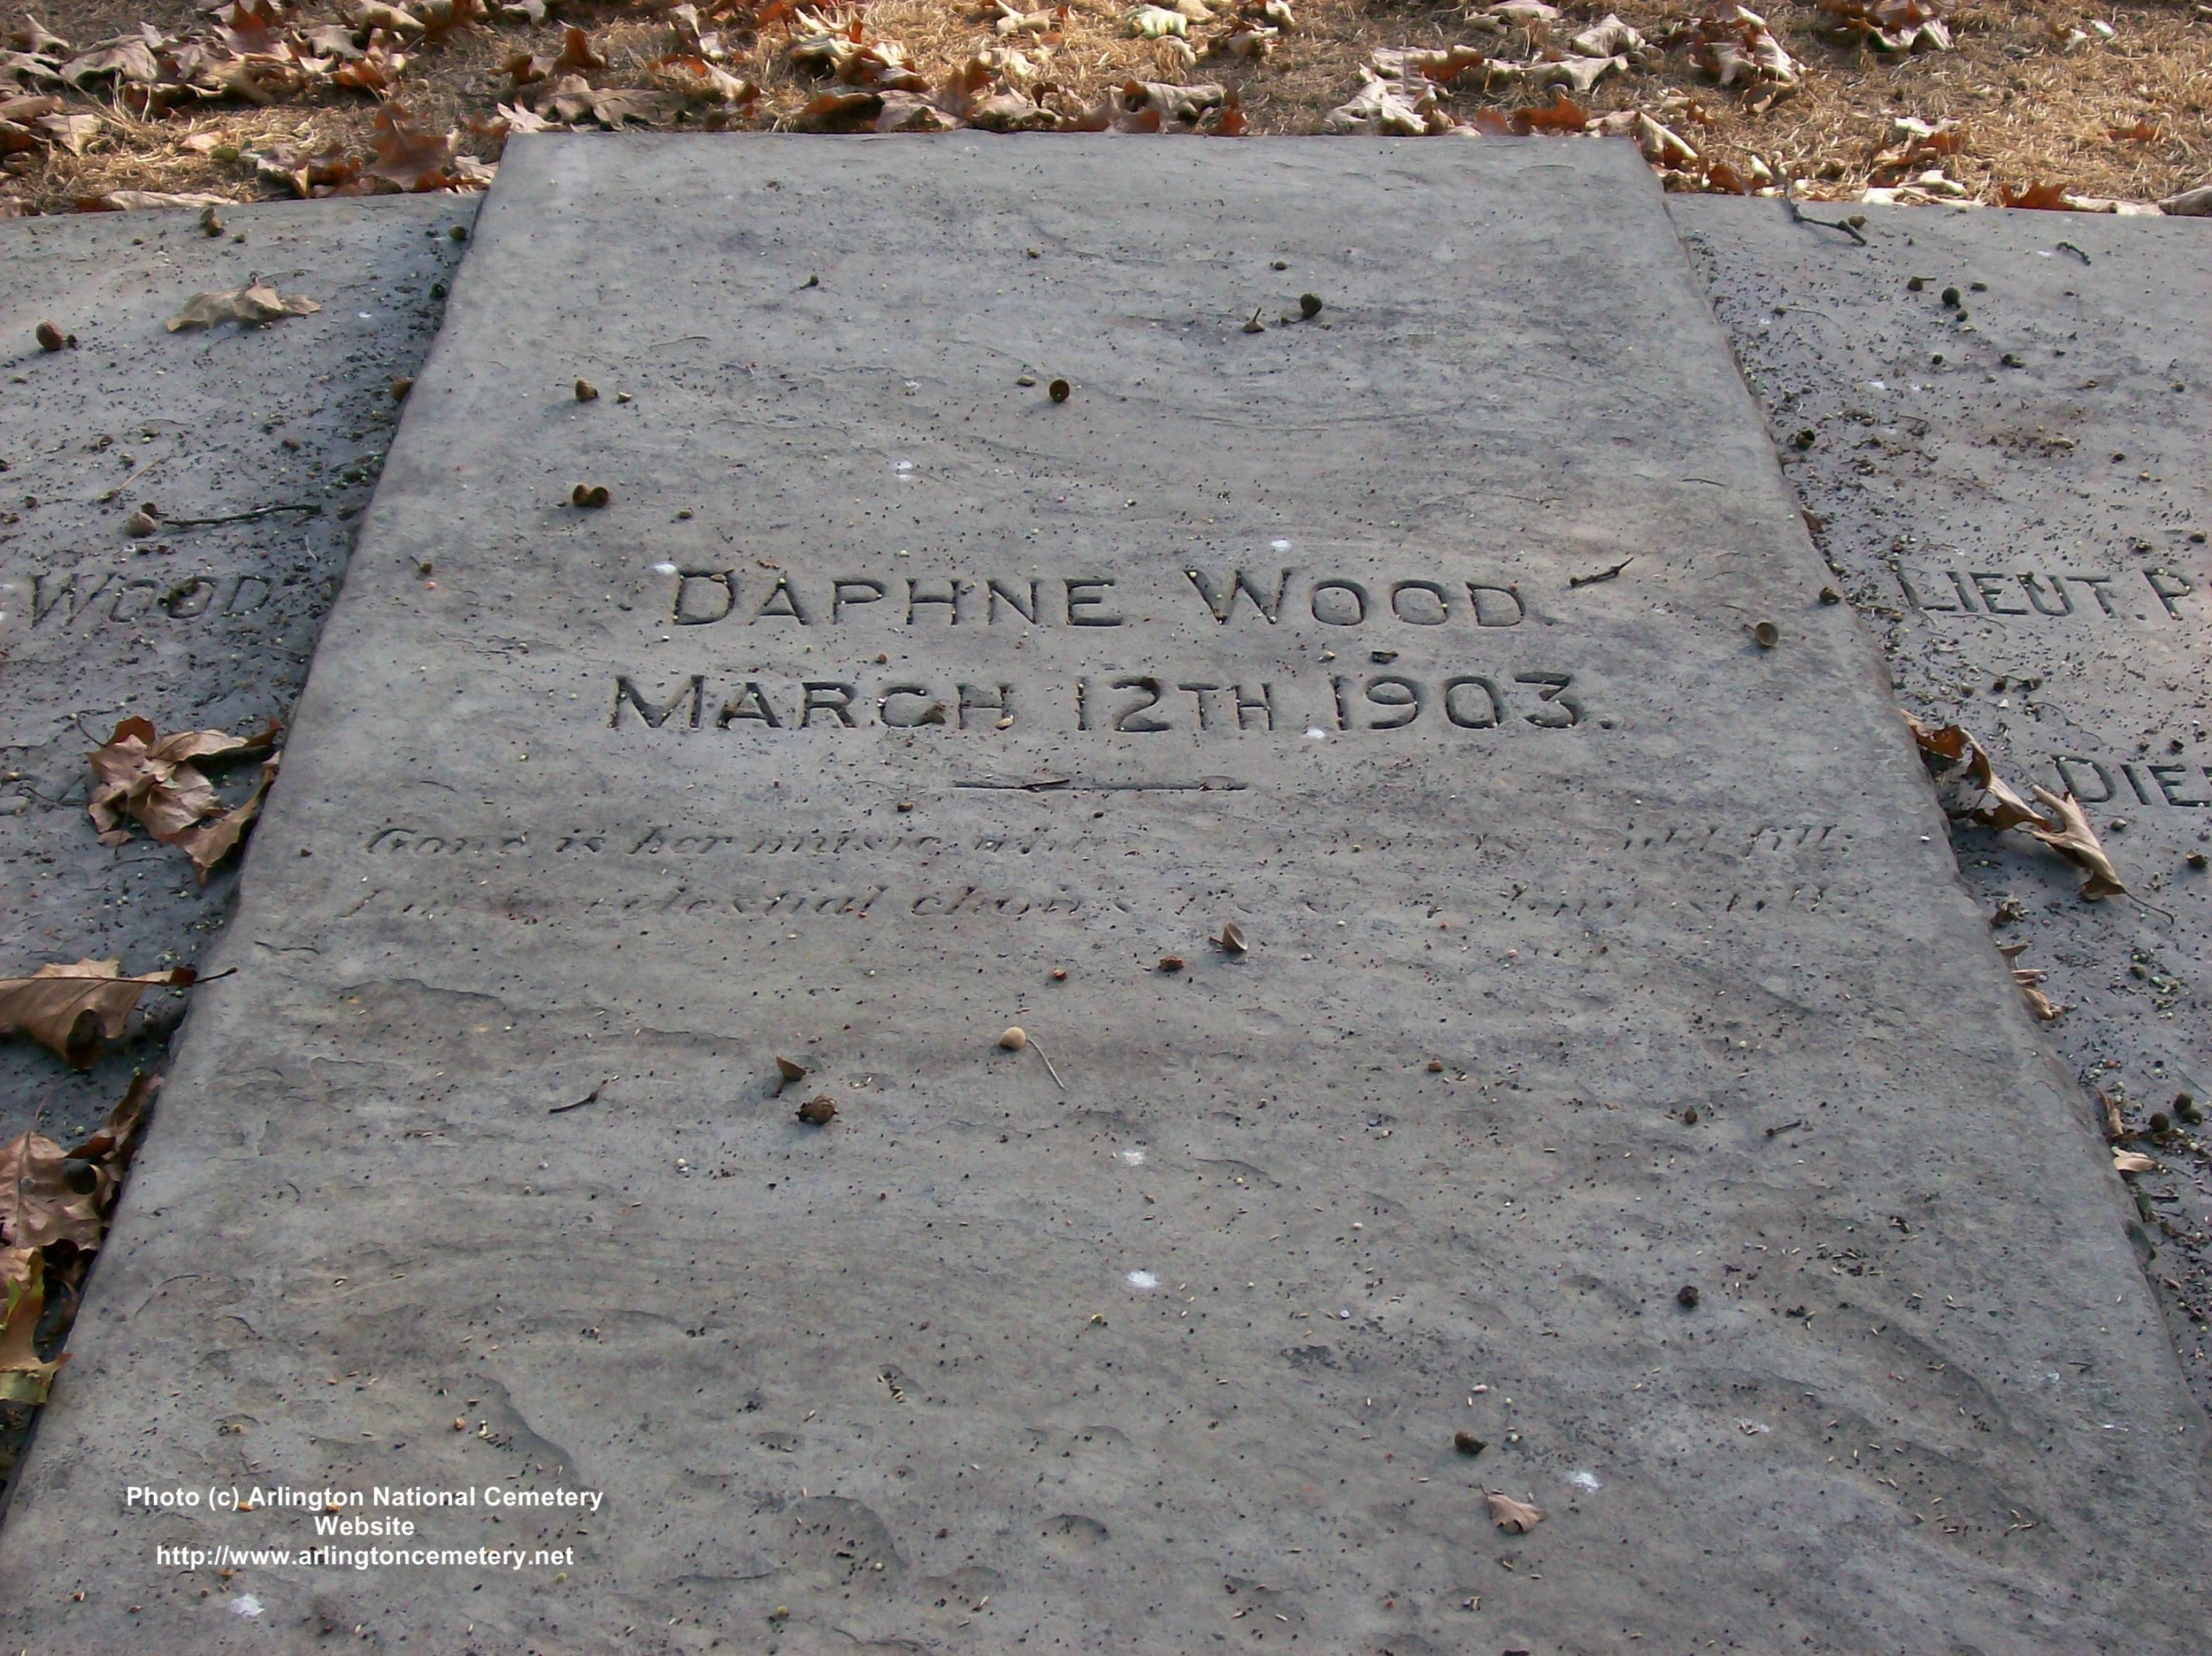 daphne-wood-gravesite-photo-october-2007-001